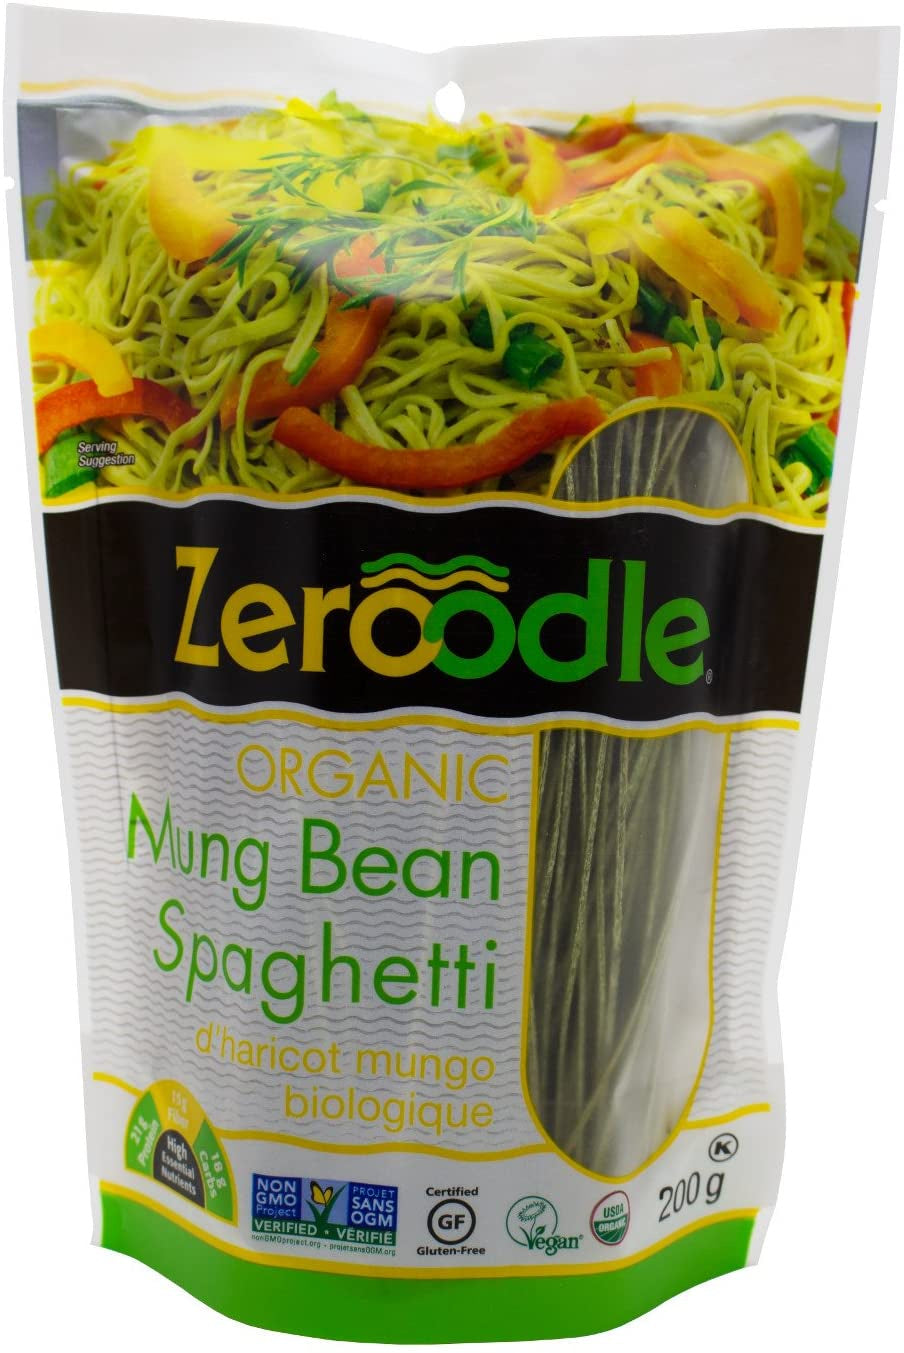 Zeroodle - Mung Bean Spaghetti